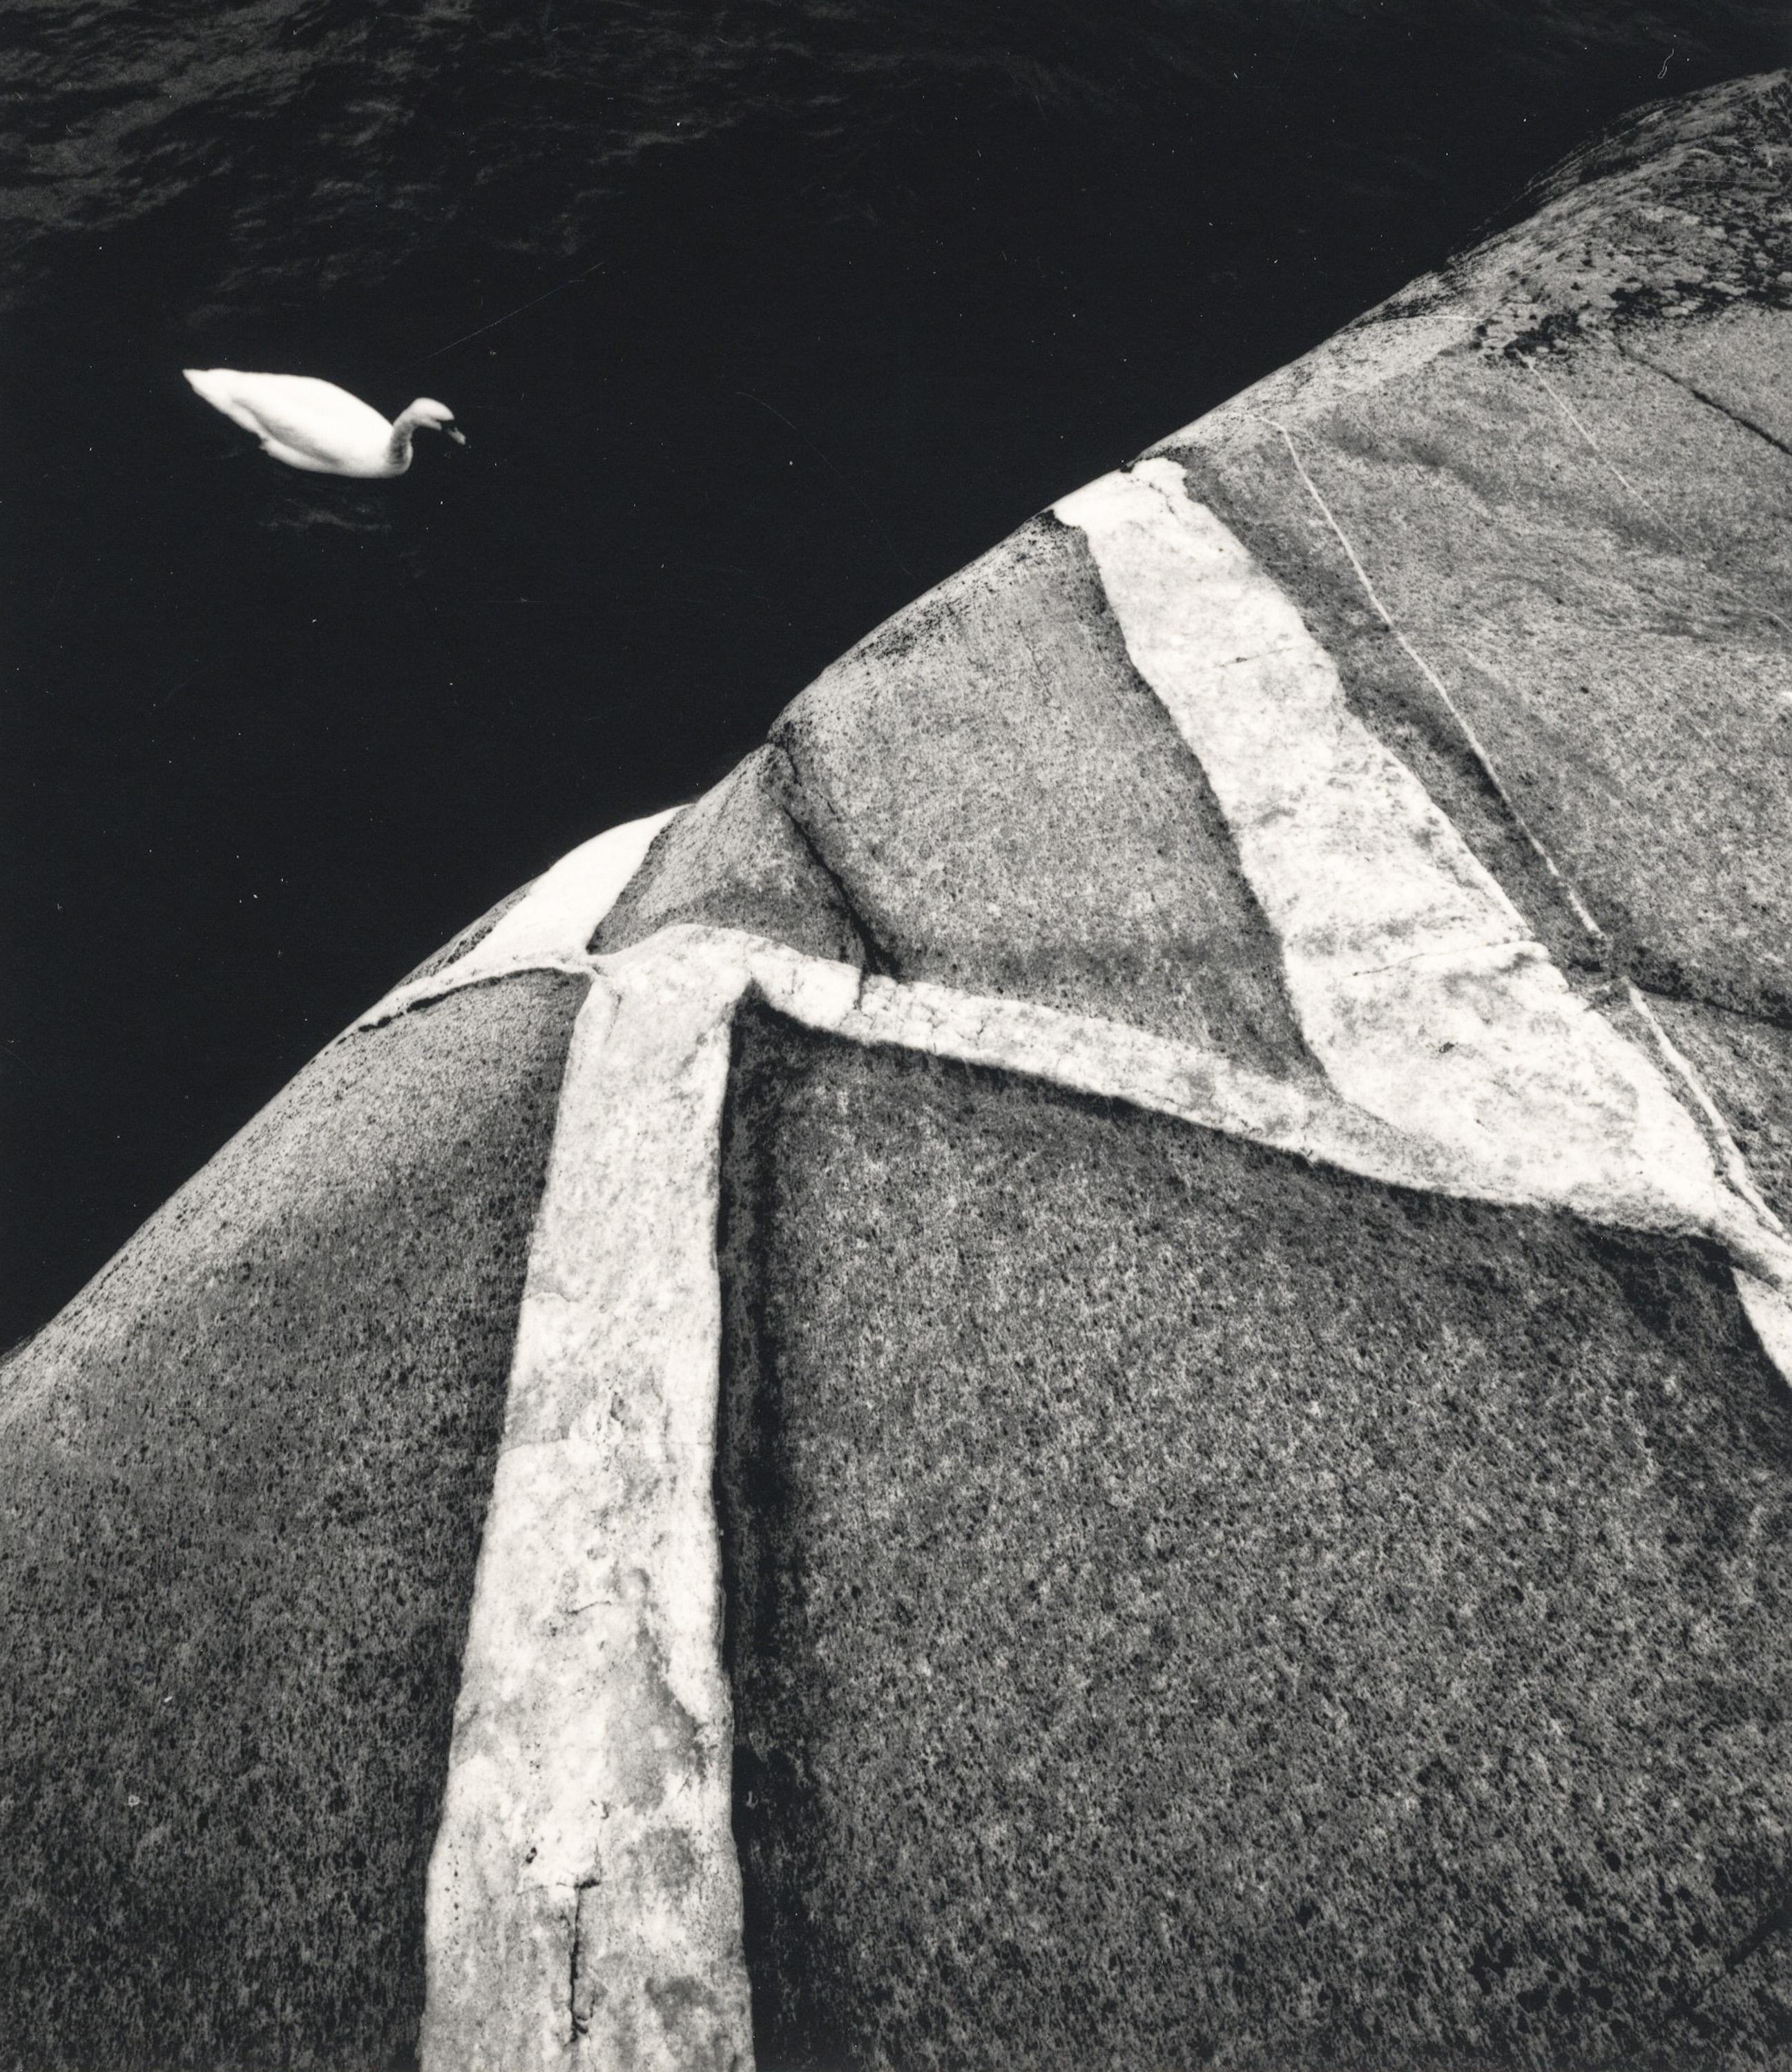 Abstract Photograph Pentti Sammallahti - Kokar, Finlande (Formation rocheuse abstraite et cygne nageant)